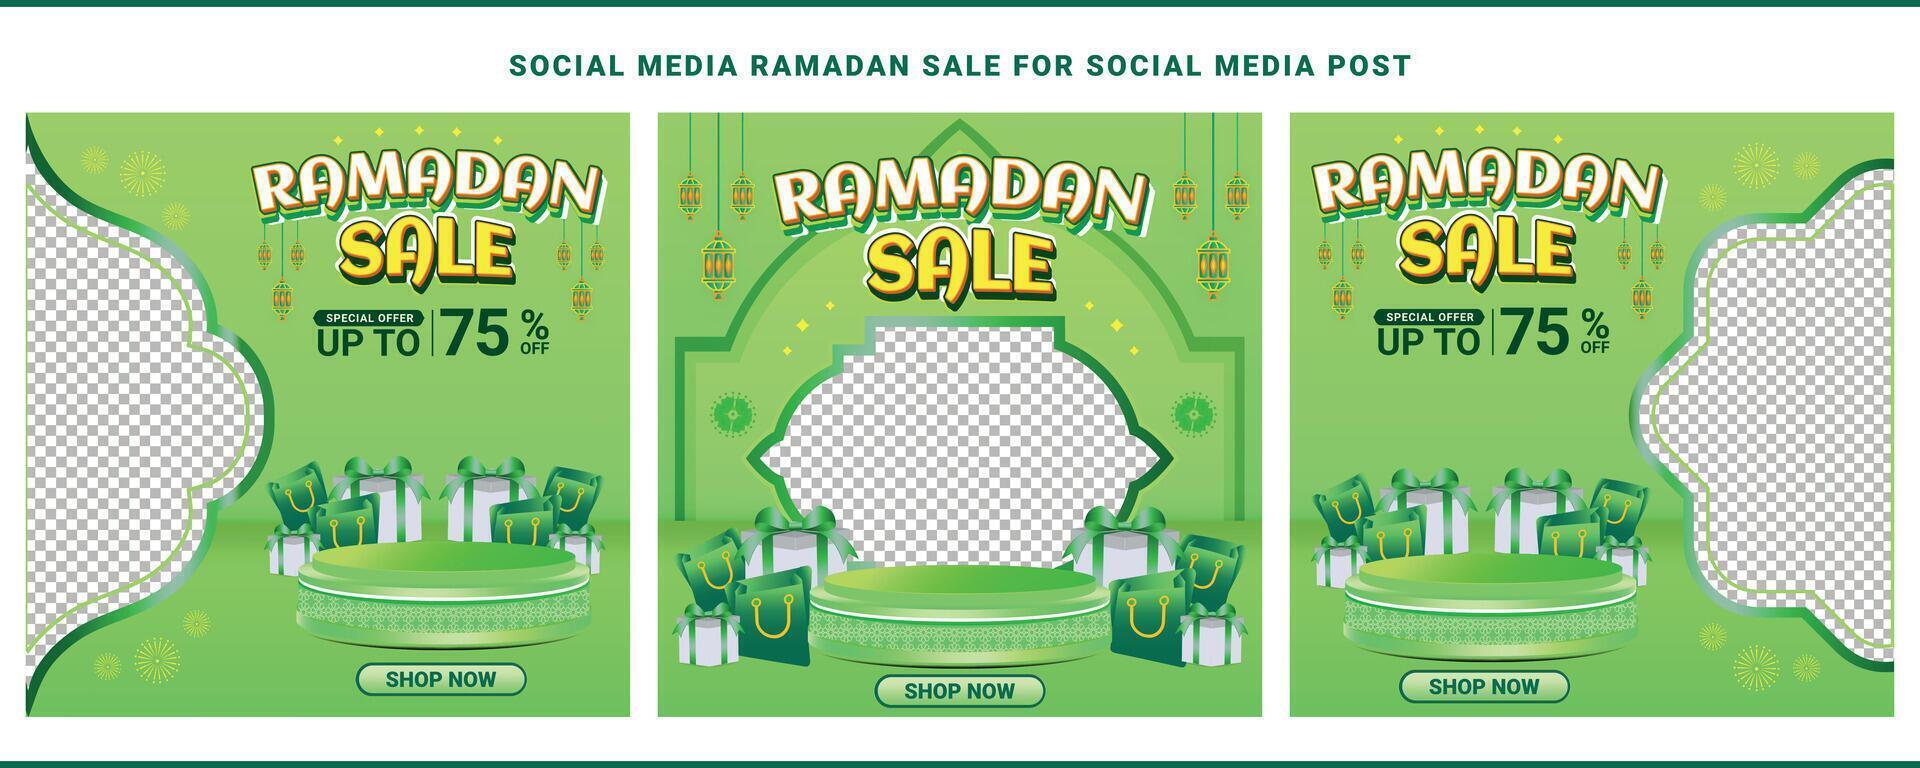 Ramadan mubarak sale promo square banner social media background template vector